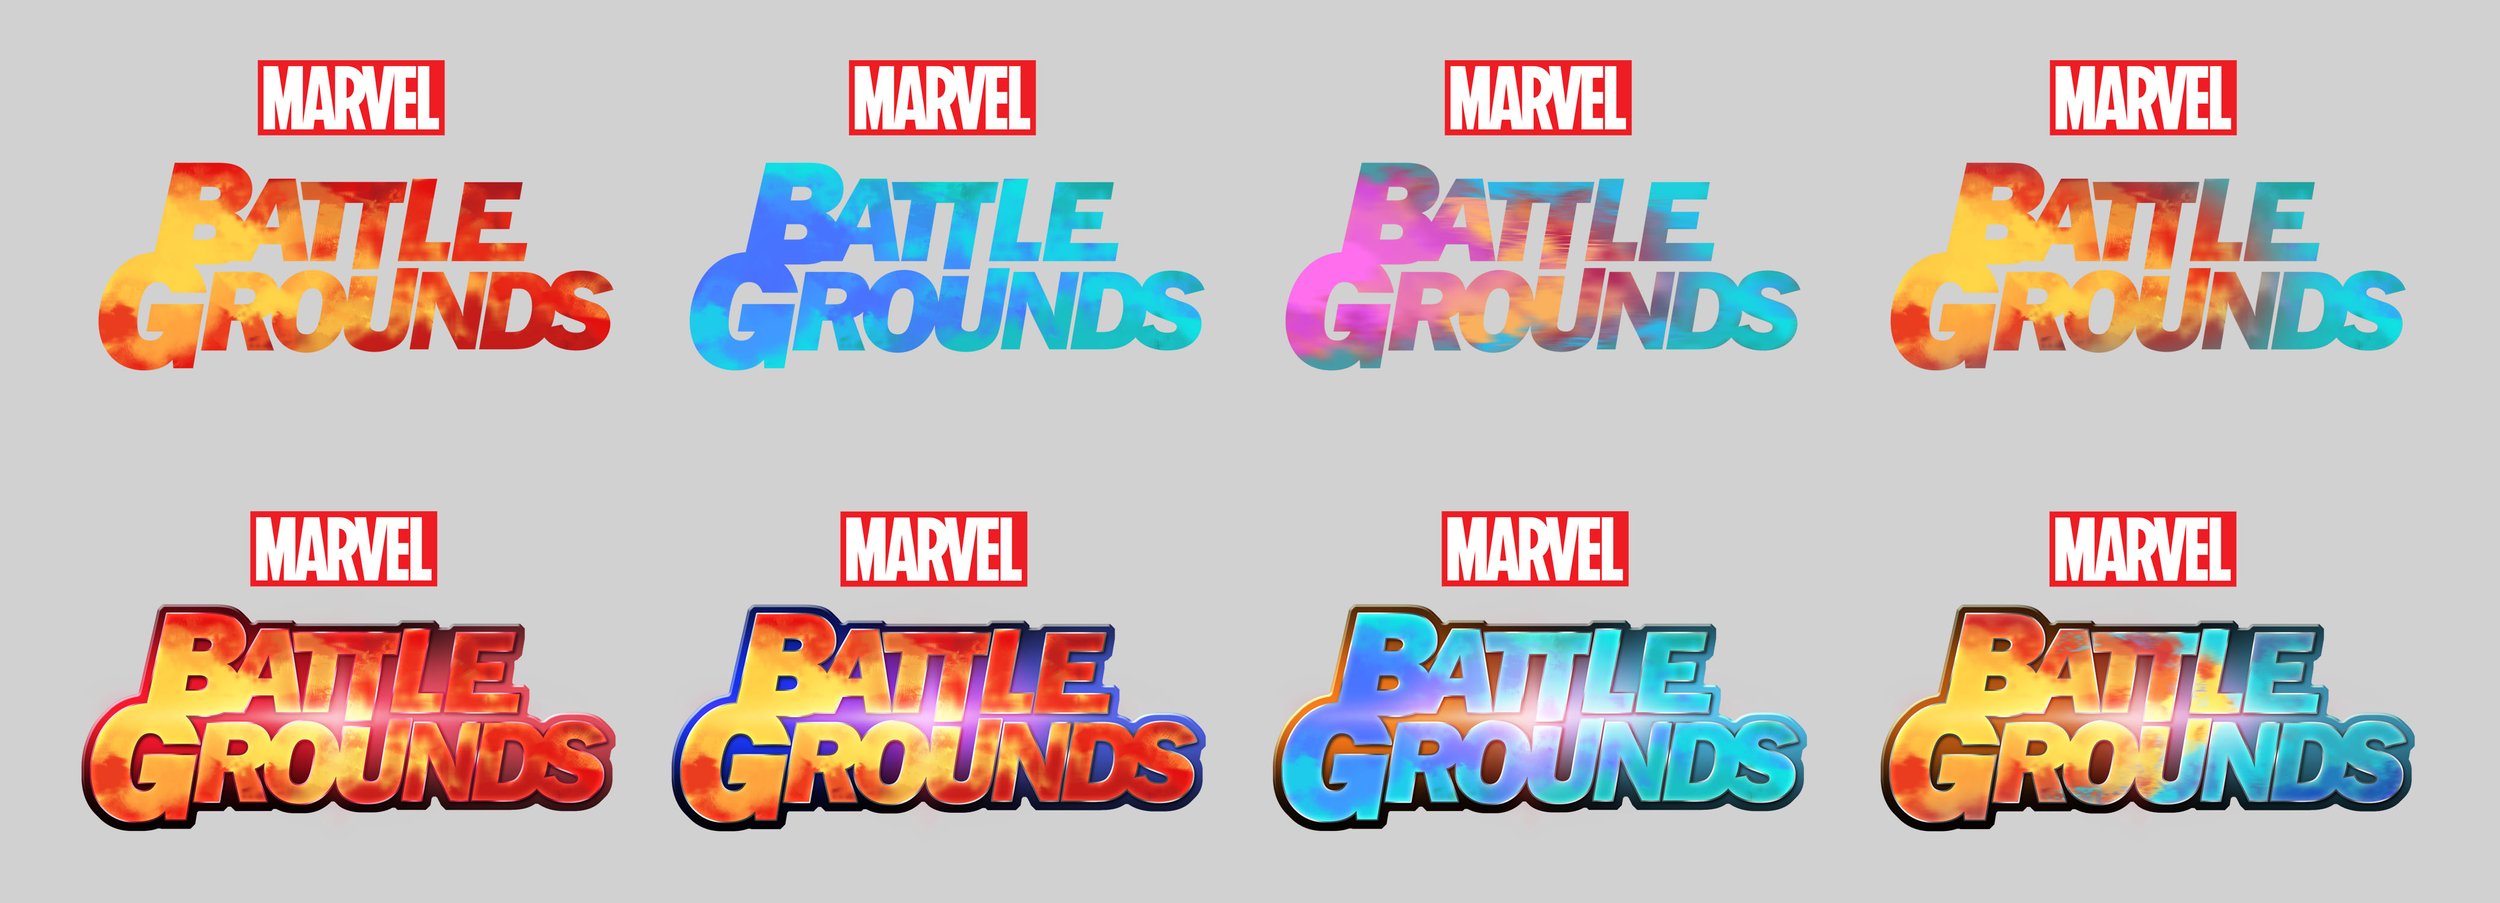 Marvel Battlegrounds - Logo Exploration